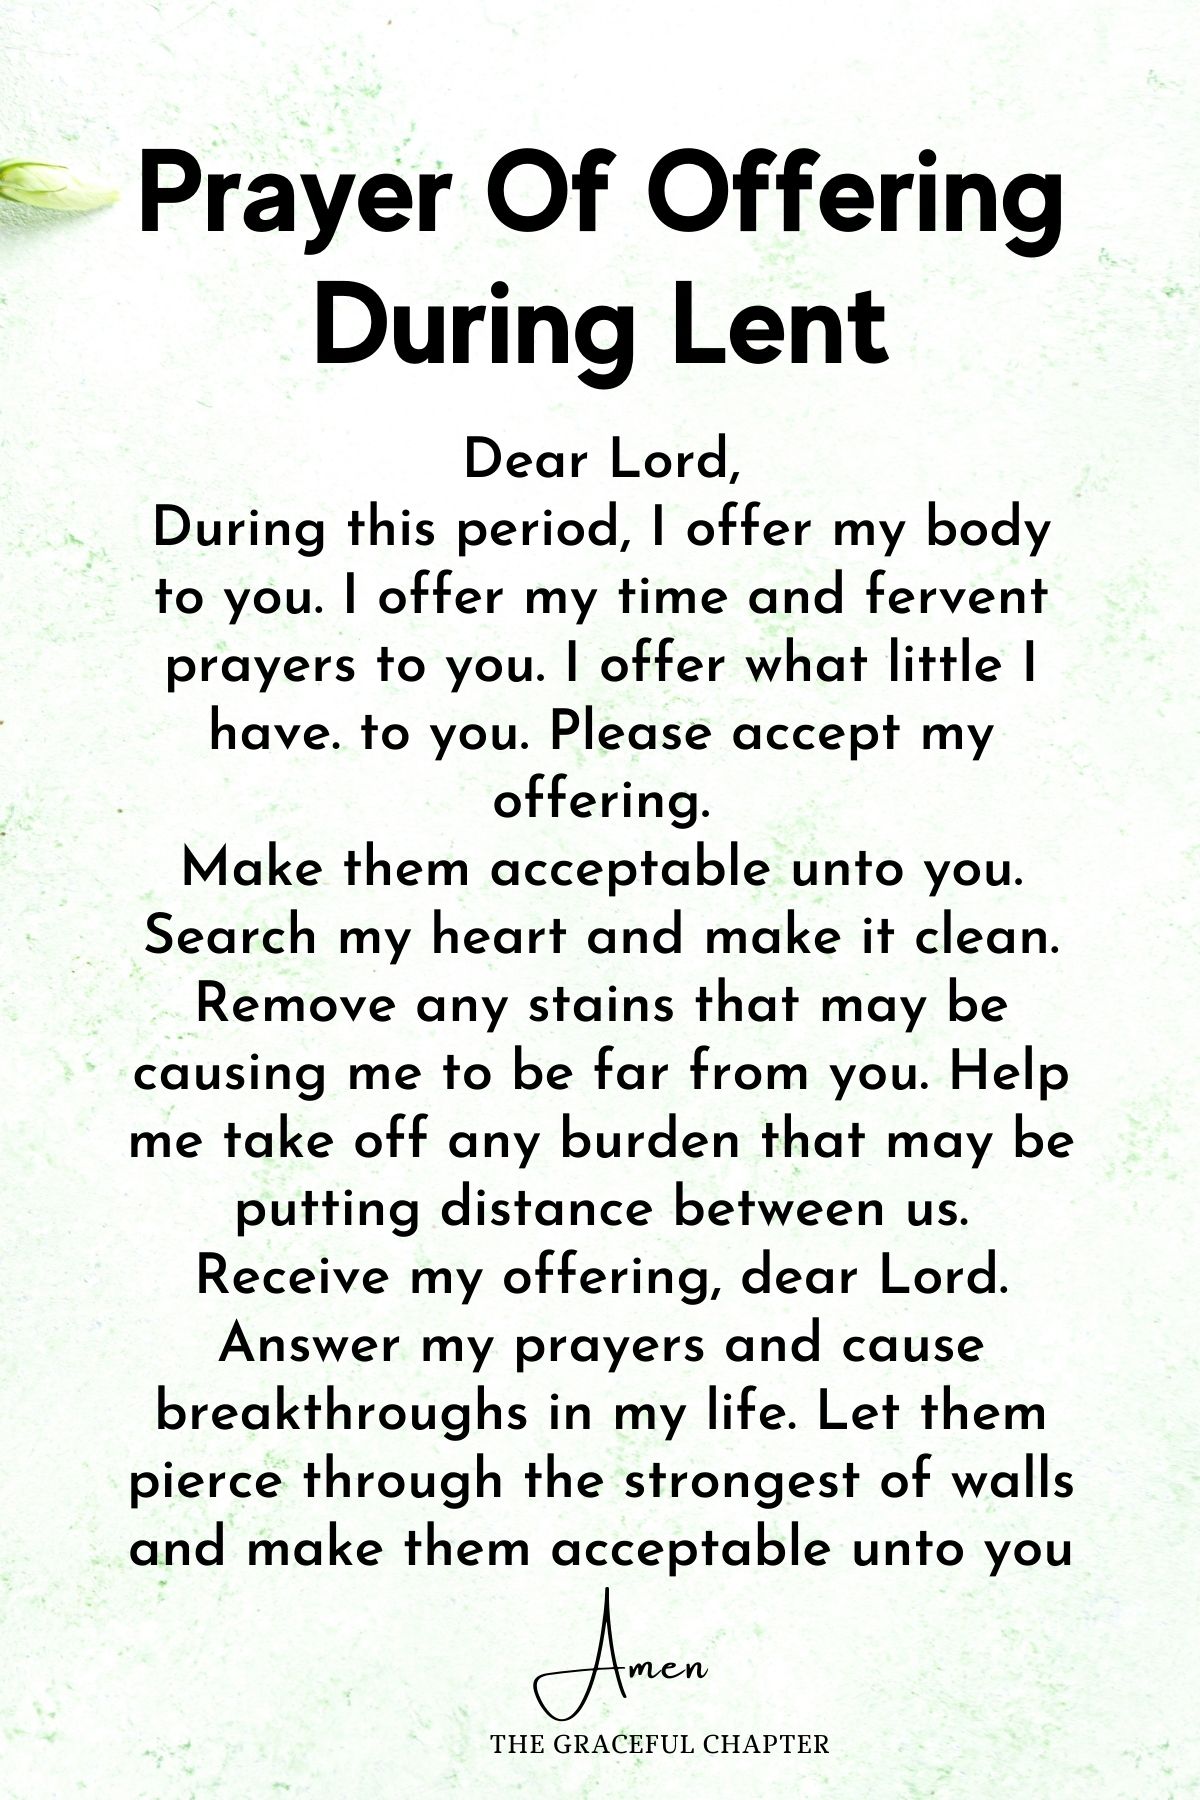 Prayer of offering during lent